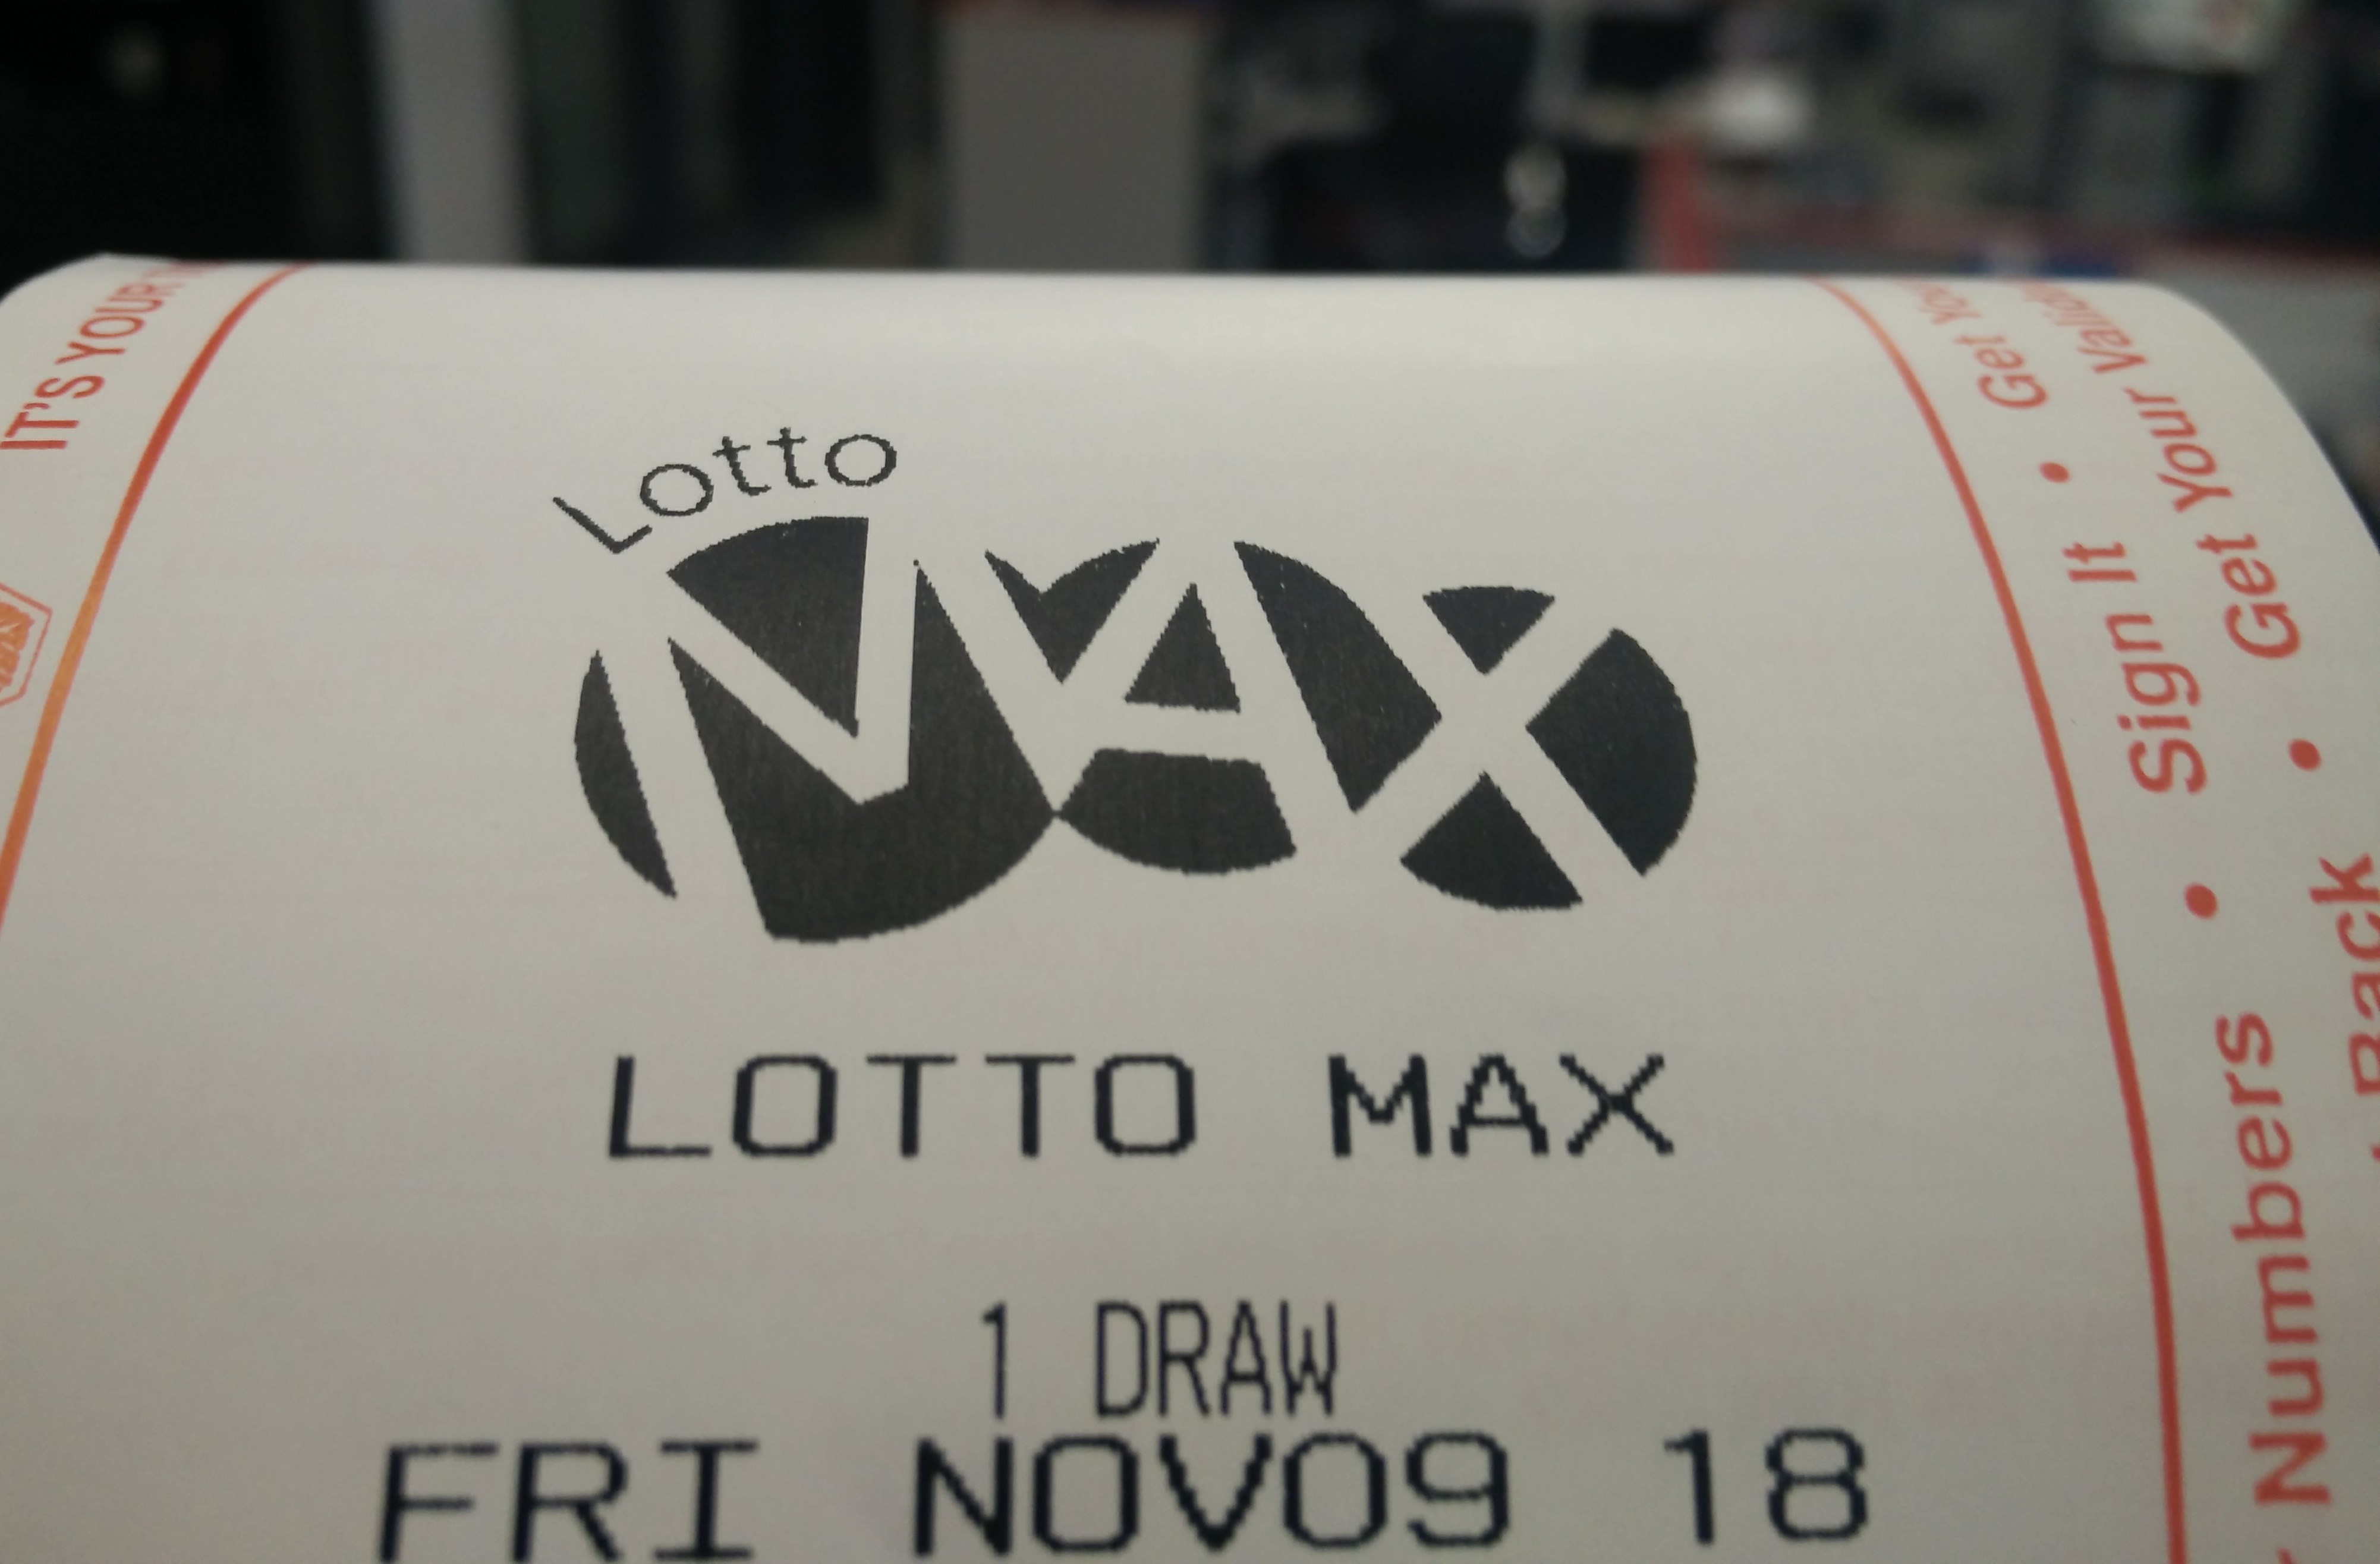 lotto max friday nov 30 2018